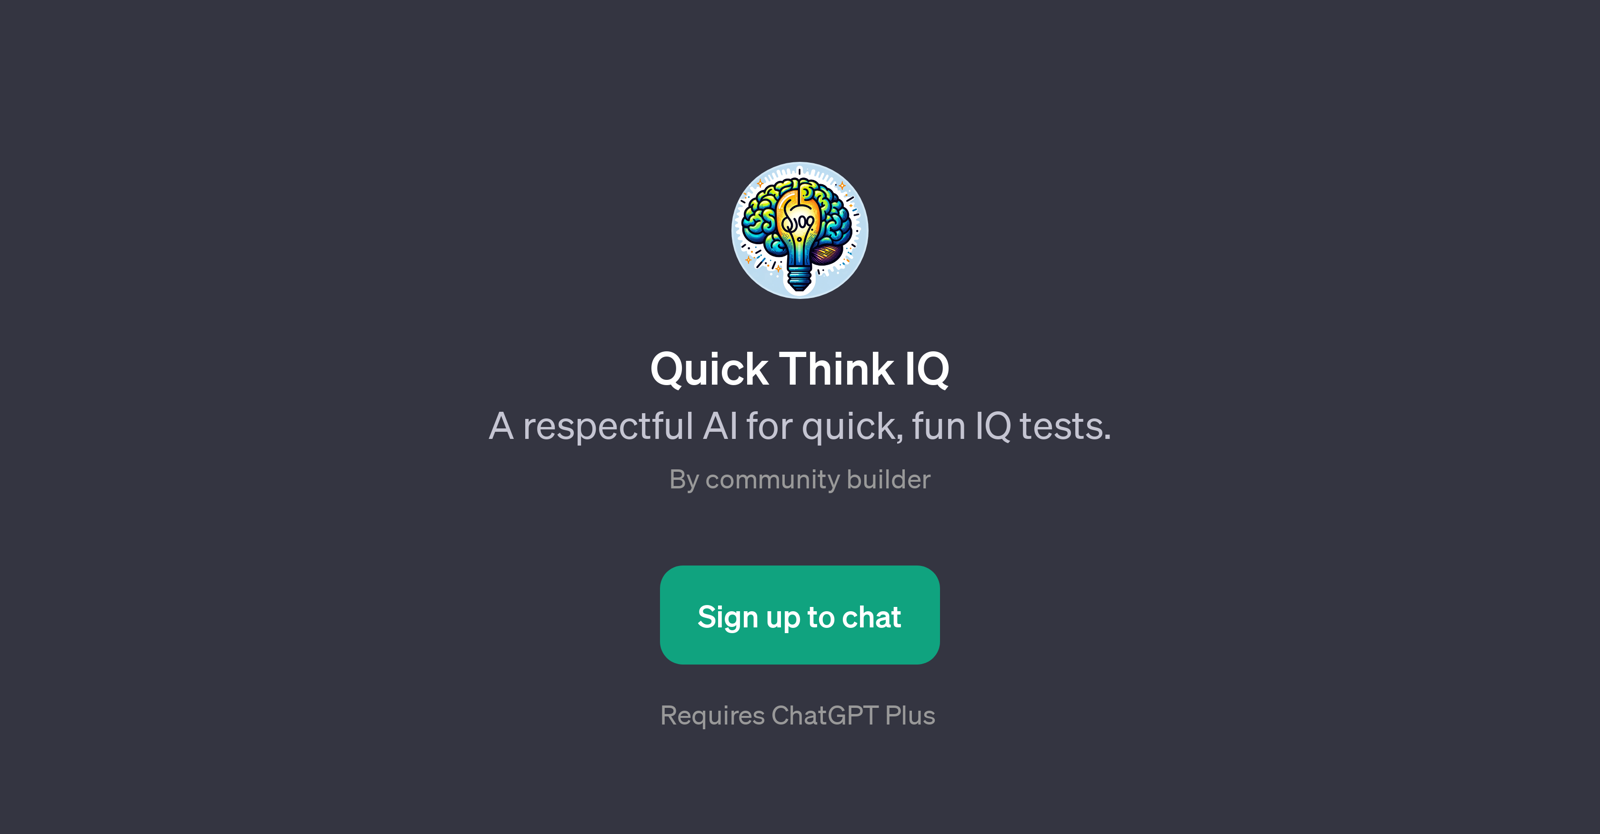 Quick Think IQ website